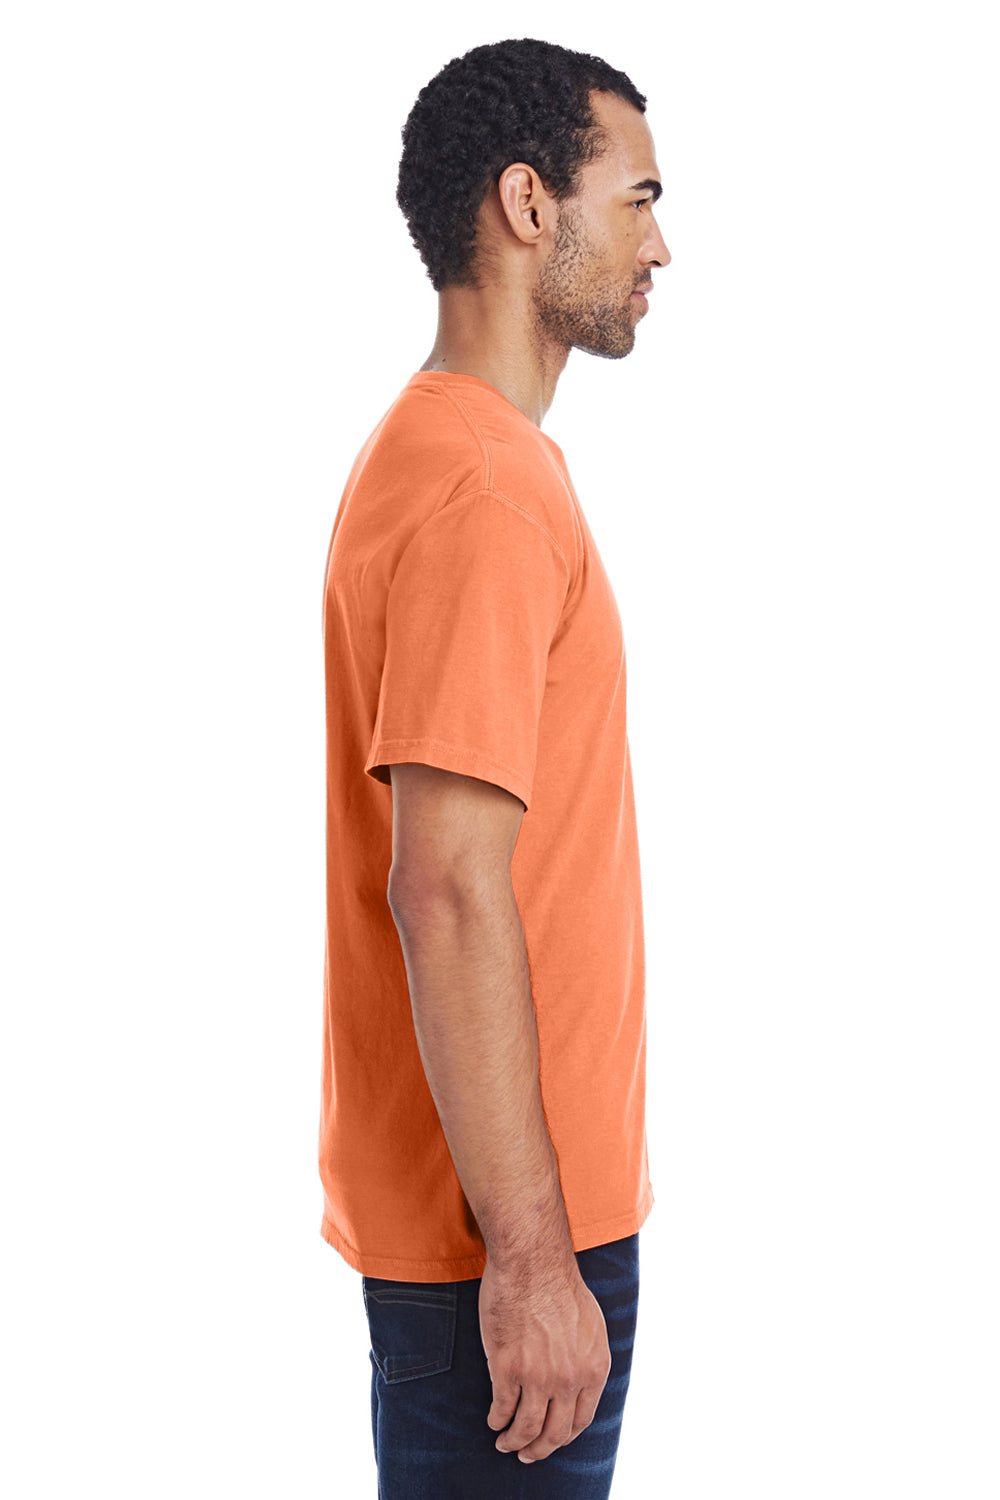 ComfortWash by Hanes GDH100 Short Sleeve Crewneck T-Shirt Horizon Orange Side